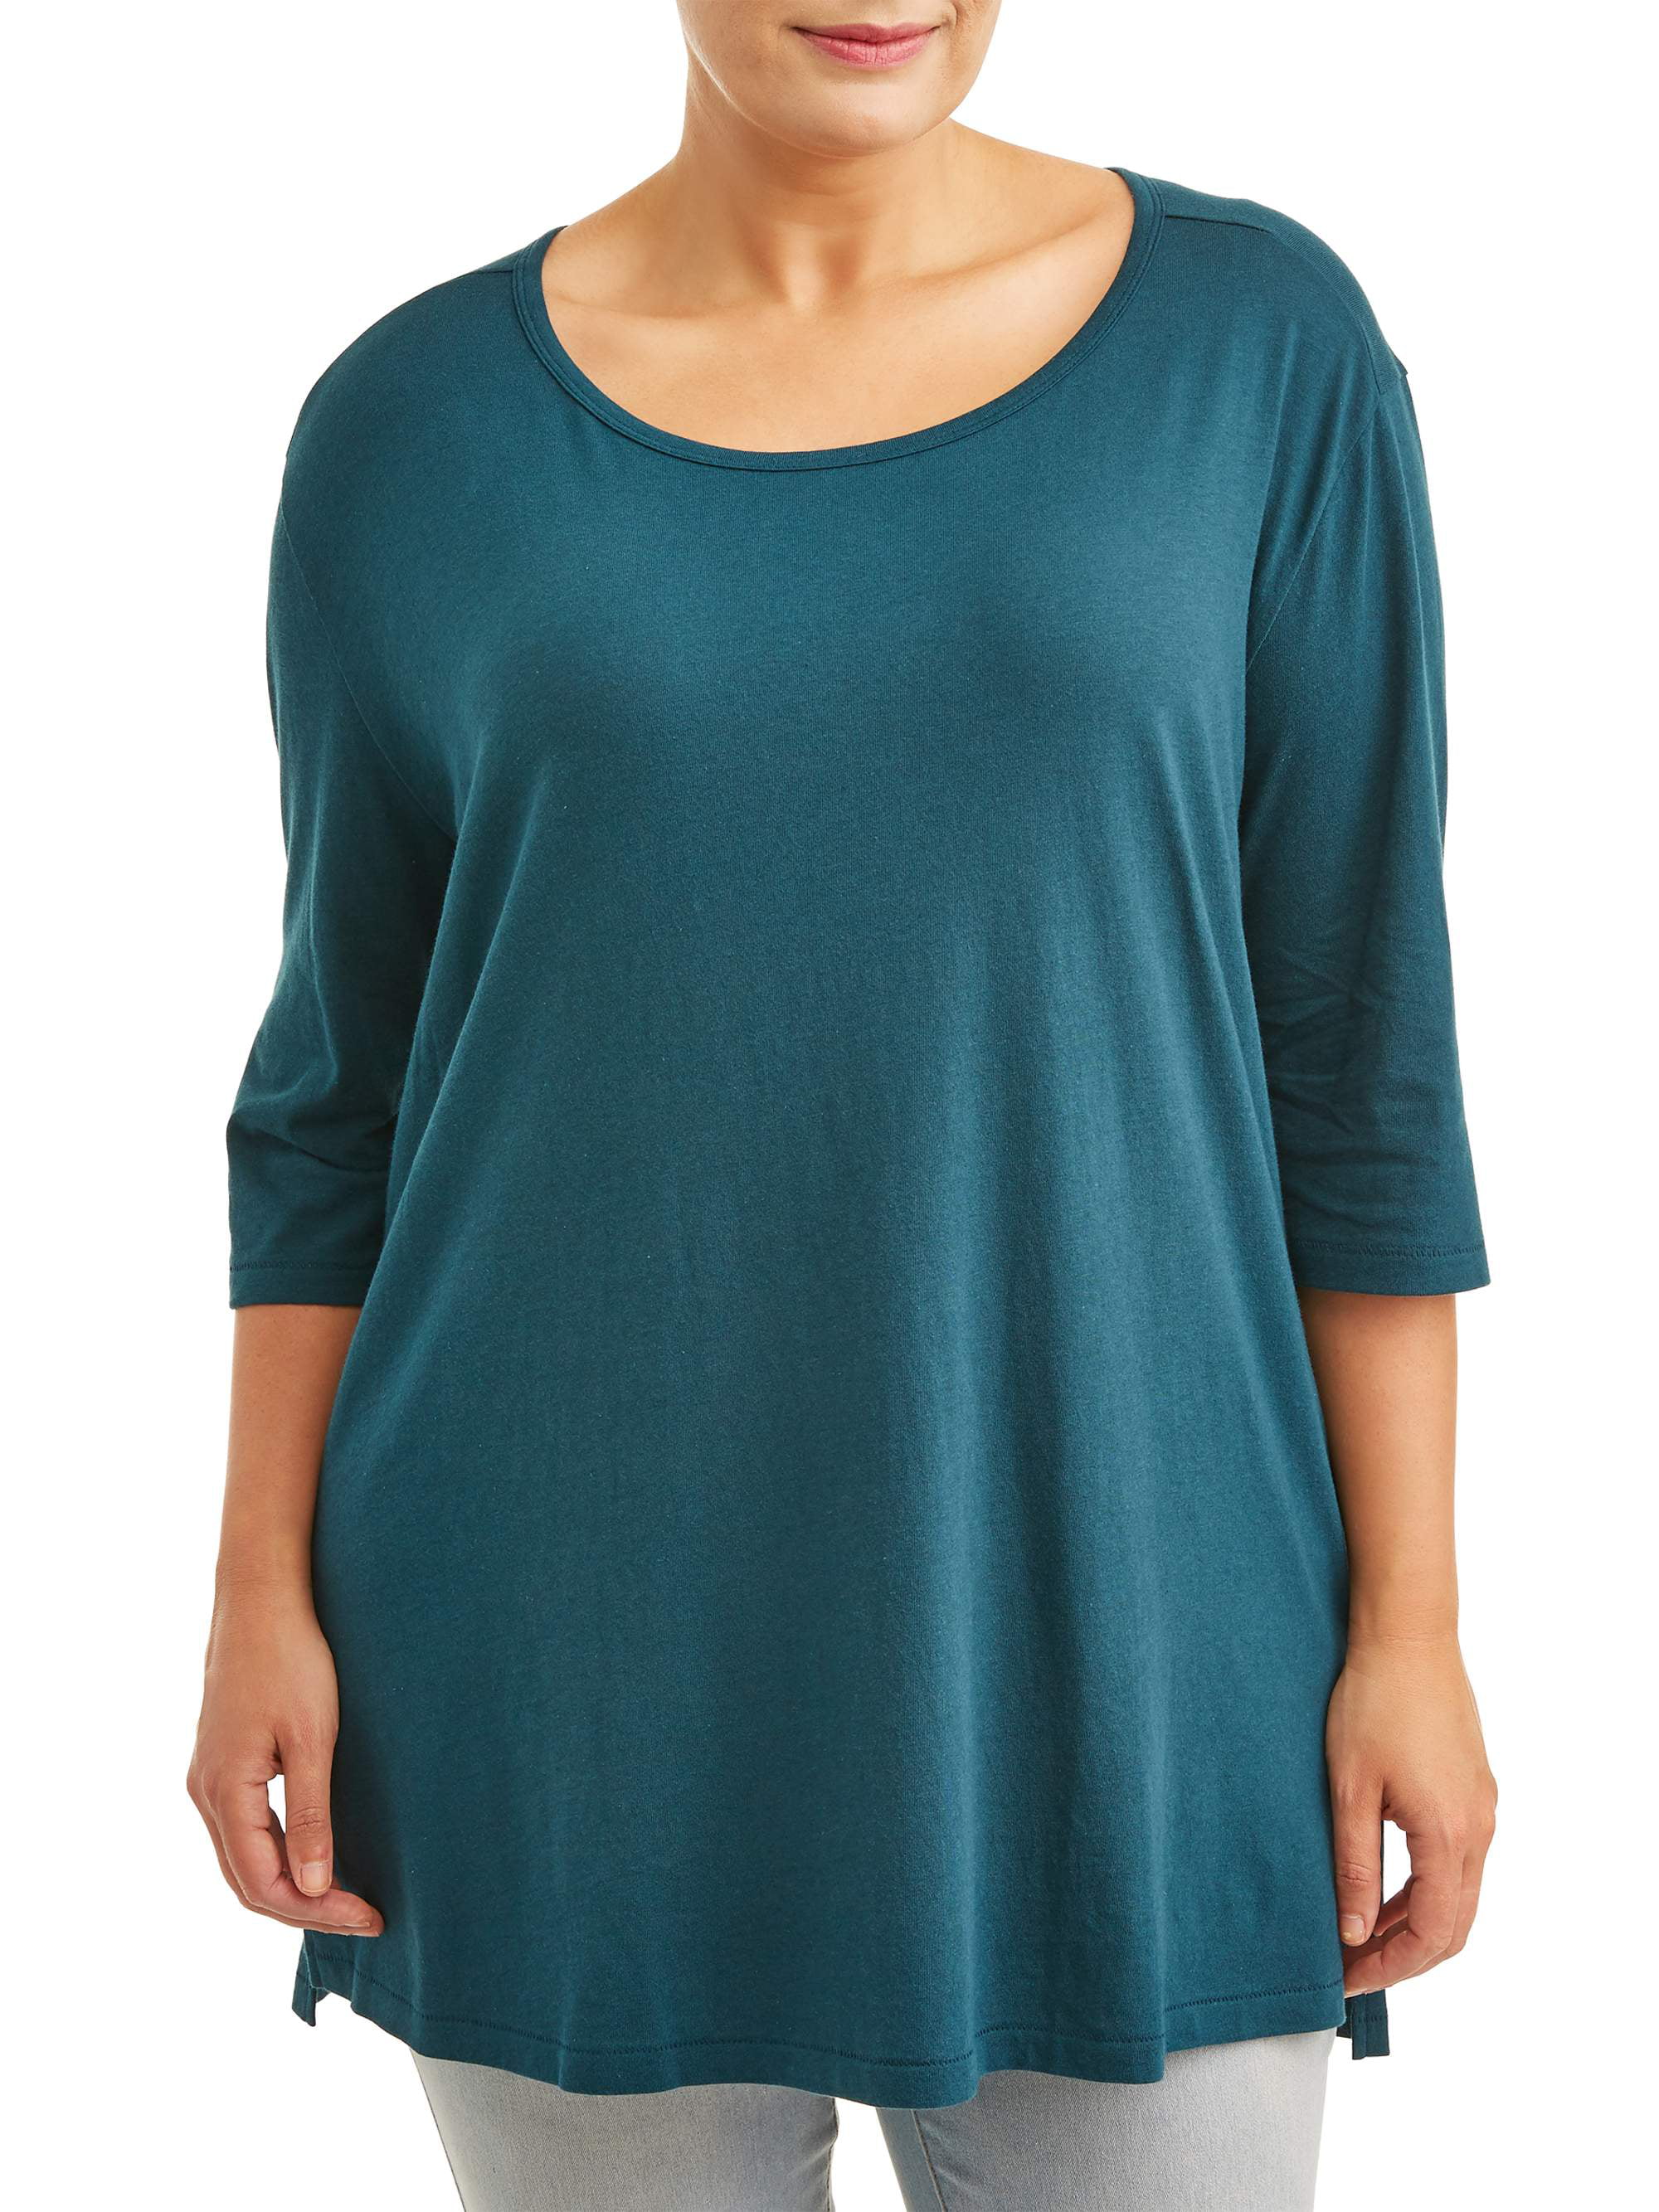 Buy ZERDOCEAN Women's Plus Size 3/4 Sleeve Lightweight Soft